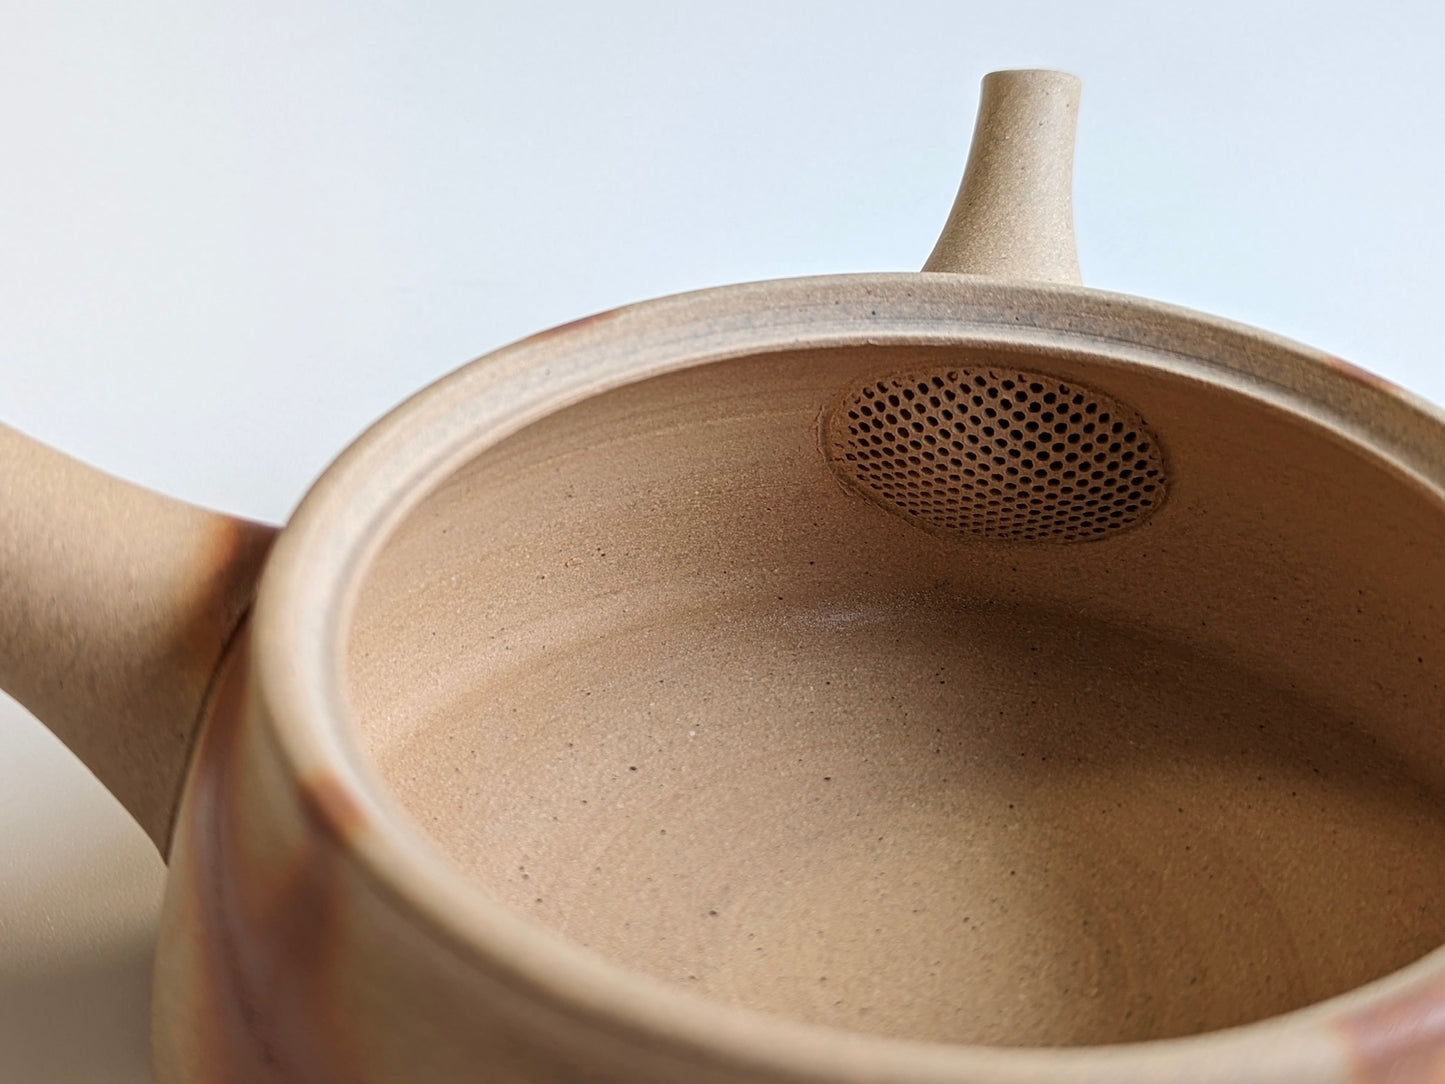 Flat teapot ("Hiragata Kyūsu") by Teruyuki Isobe, Hidasuki  (straw fired), Right-handed